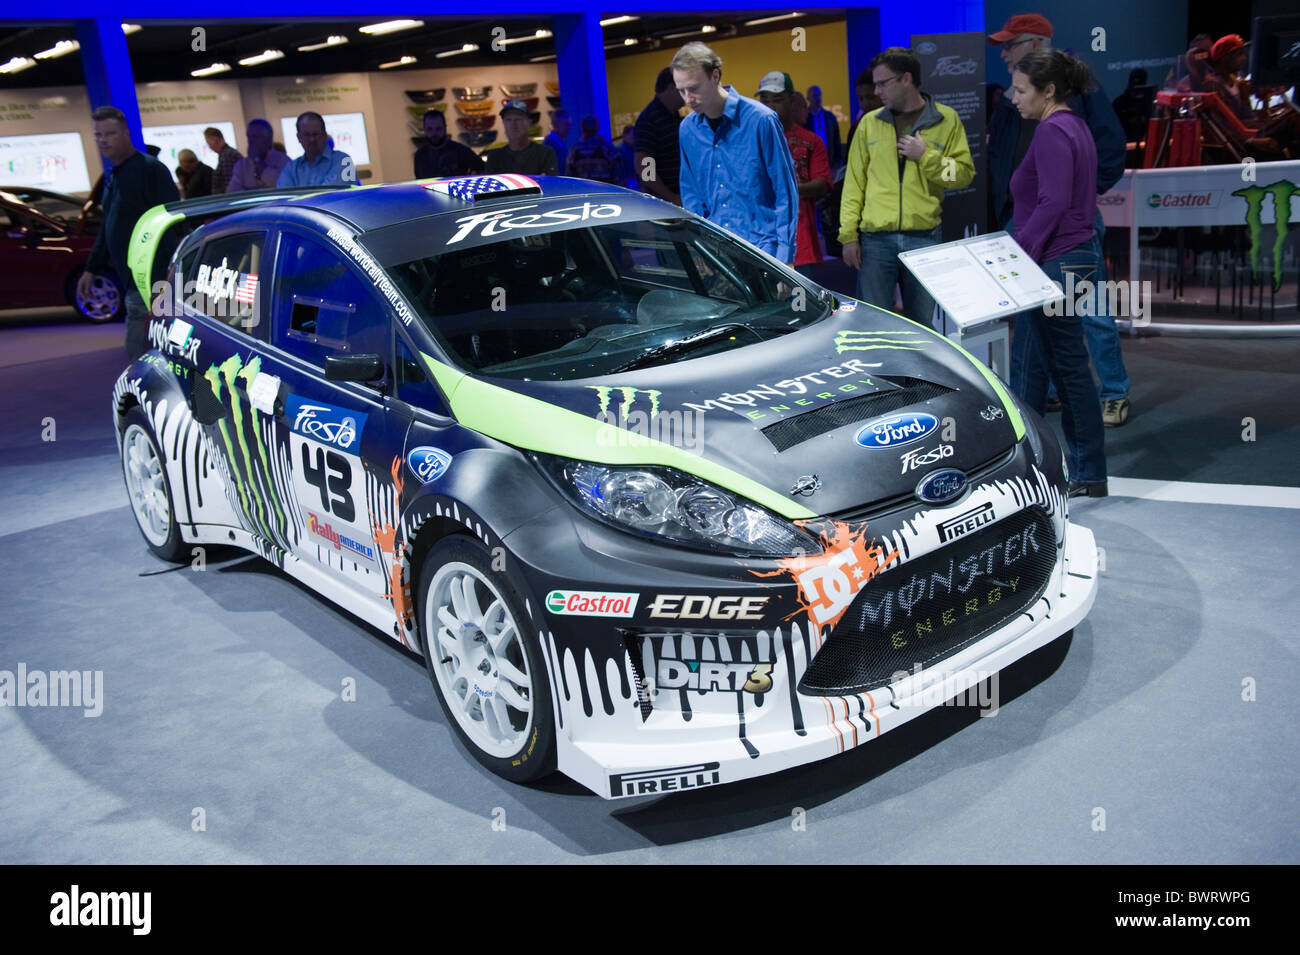 Ford fiesta rally car -Fotos und -Bildmaterial in hoher Auflösung – Alamy